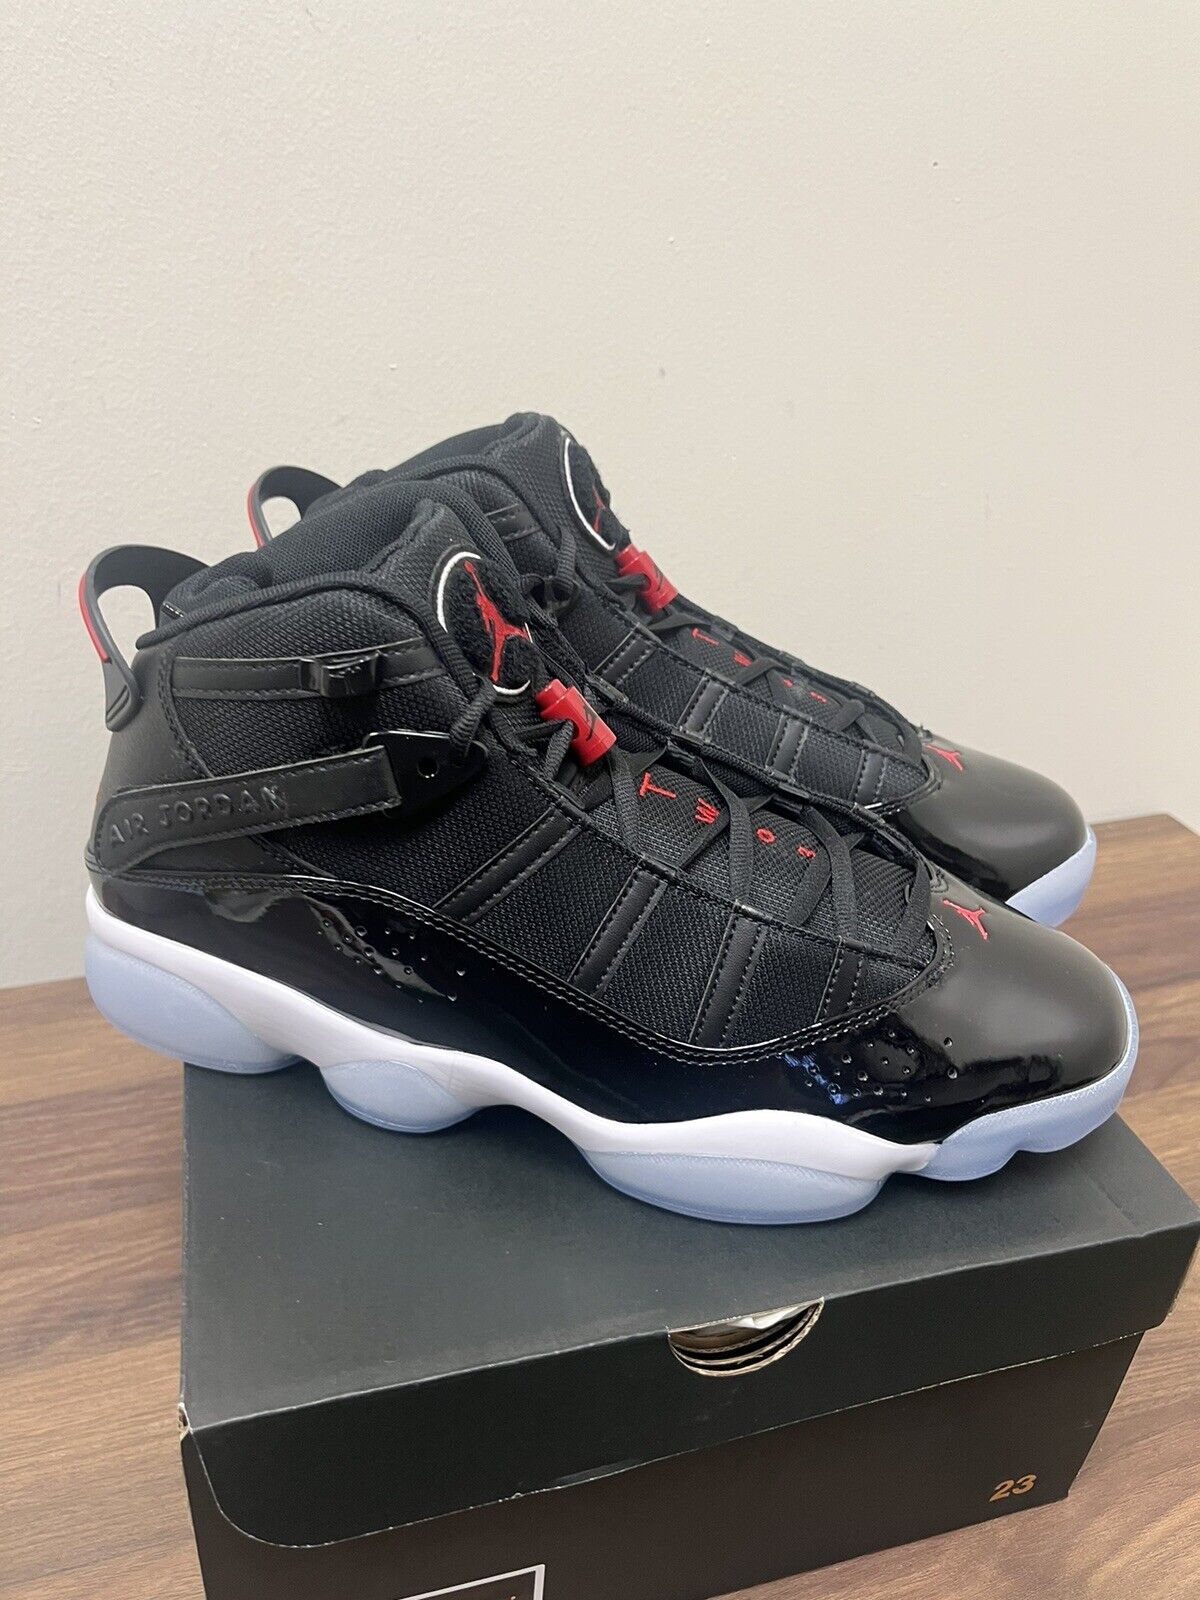 Nike Air Jordan 6 Rings Mens Size 10 Black Gym Red Sneakers 322992-064 Brand New